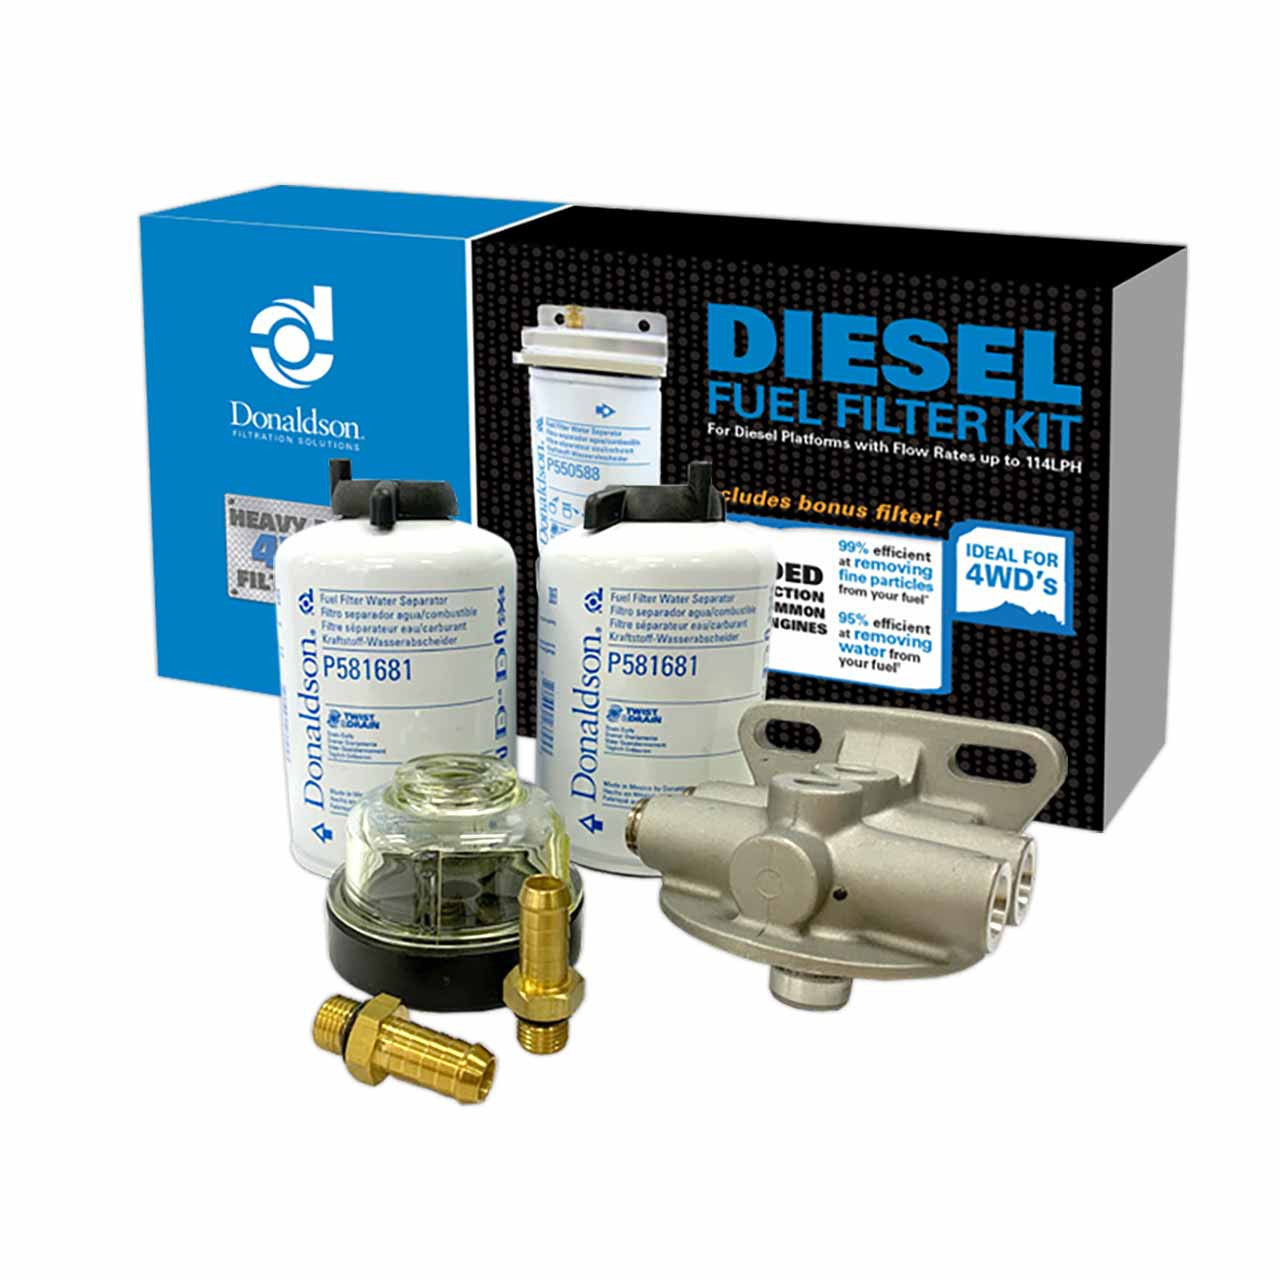 X900169 Donaldson Diesel Fuel Filter Kit 3 Micron High Efficiency Flow Rates 245lph